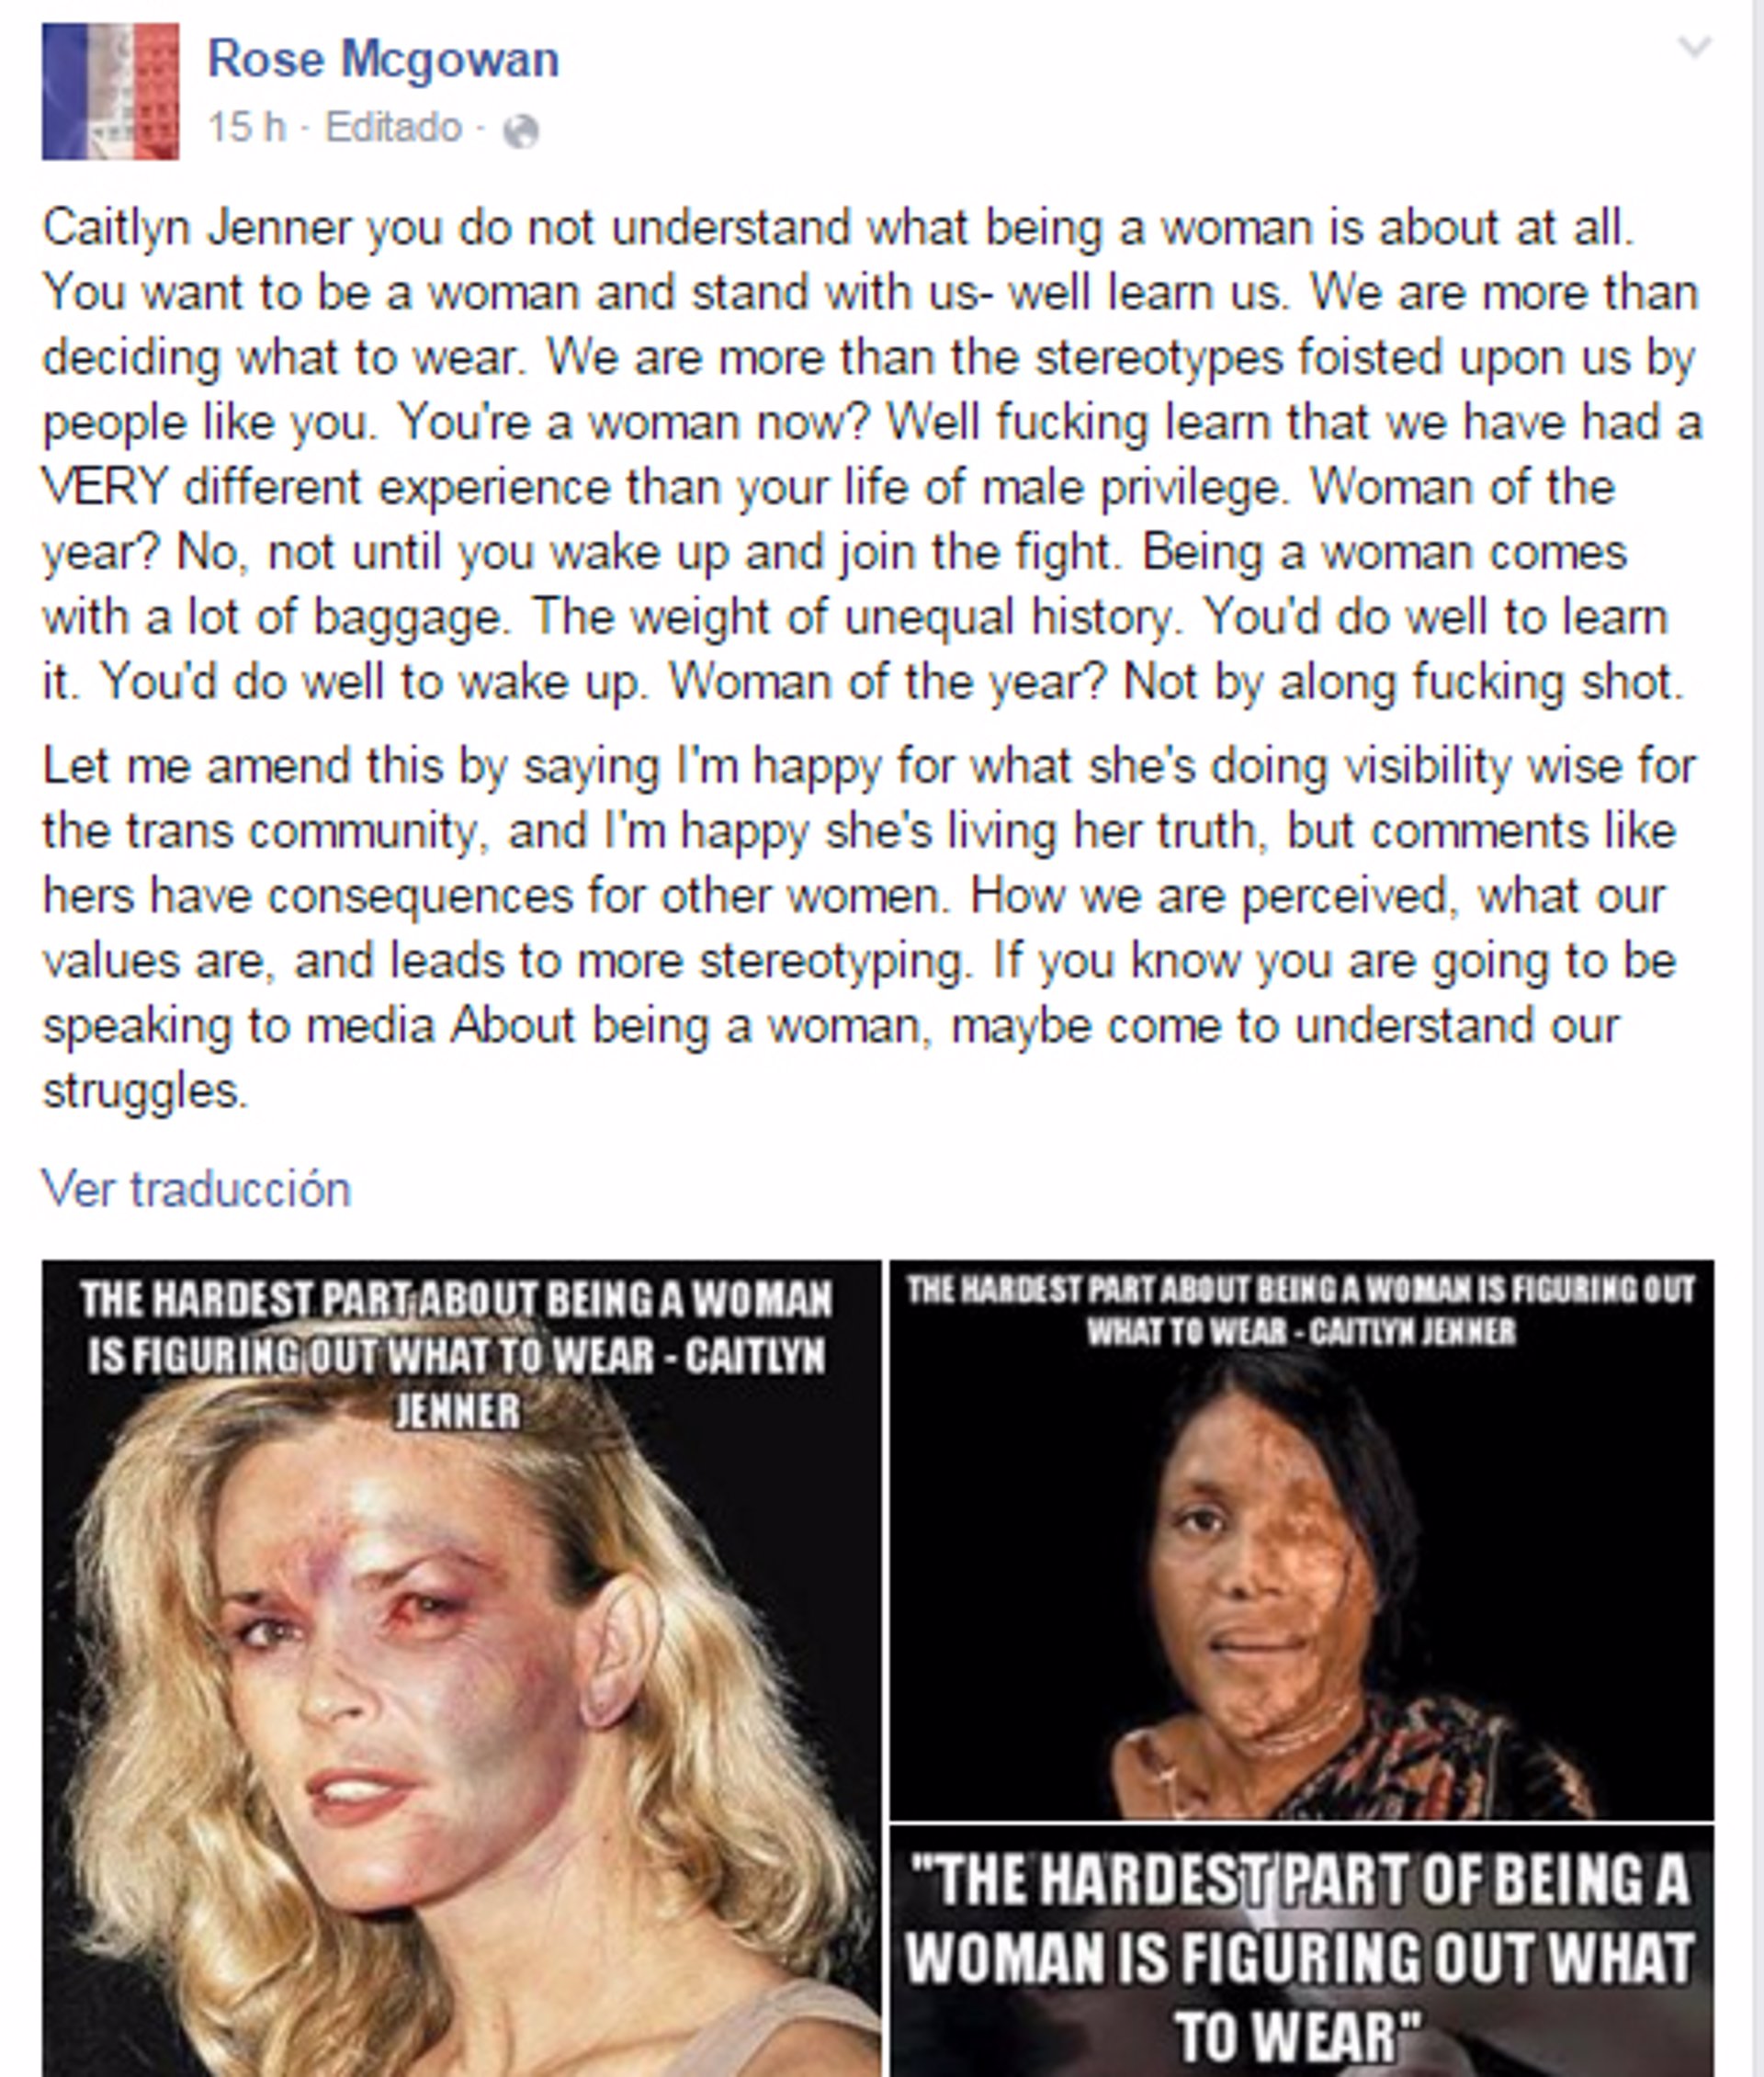 facebook de rose mcgowan arremetiendo contra caitlyn jenner